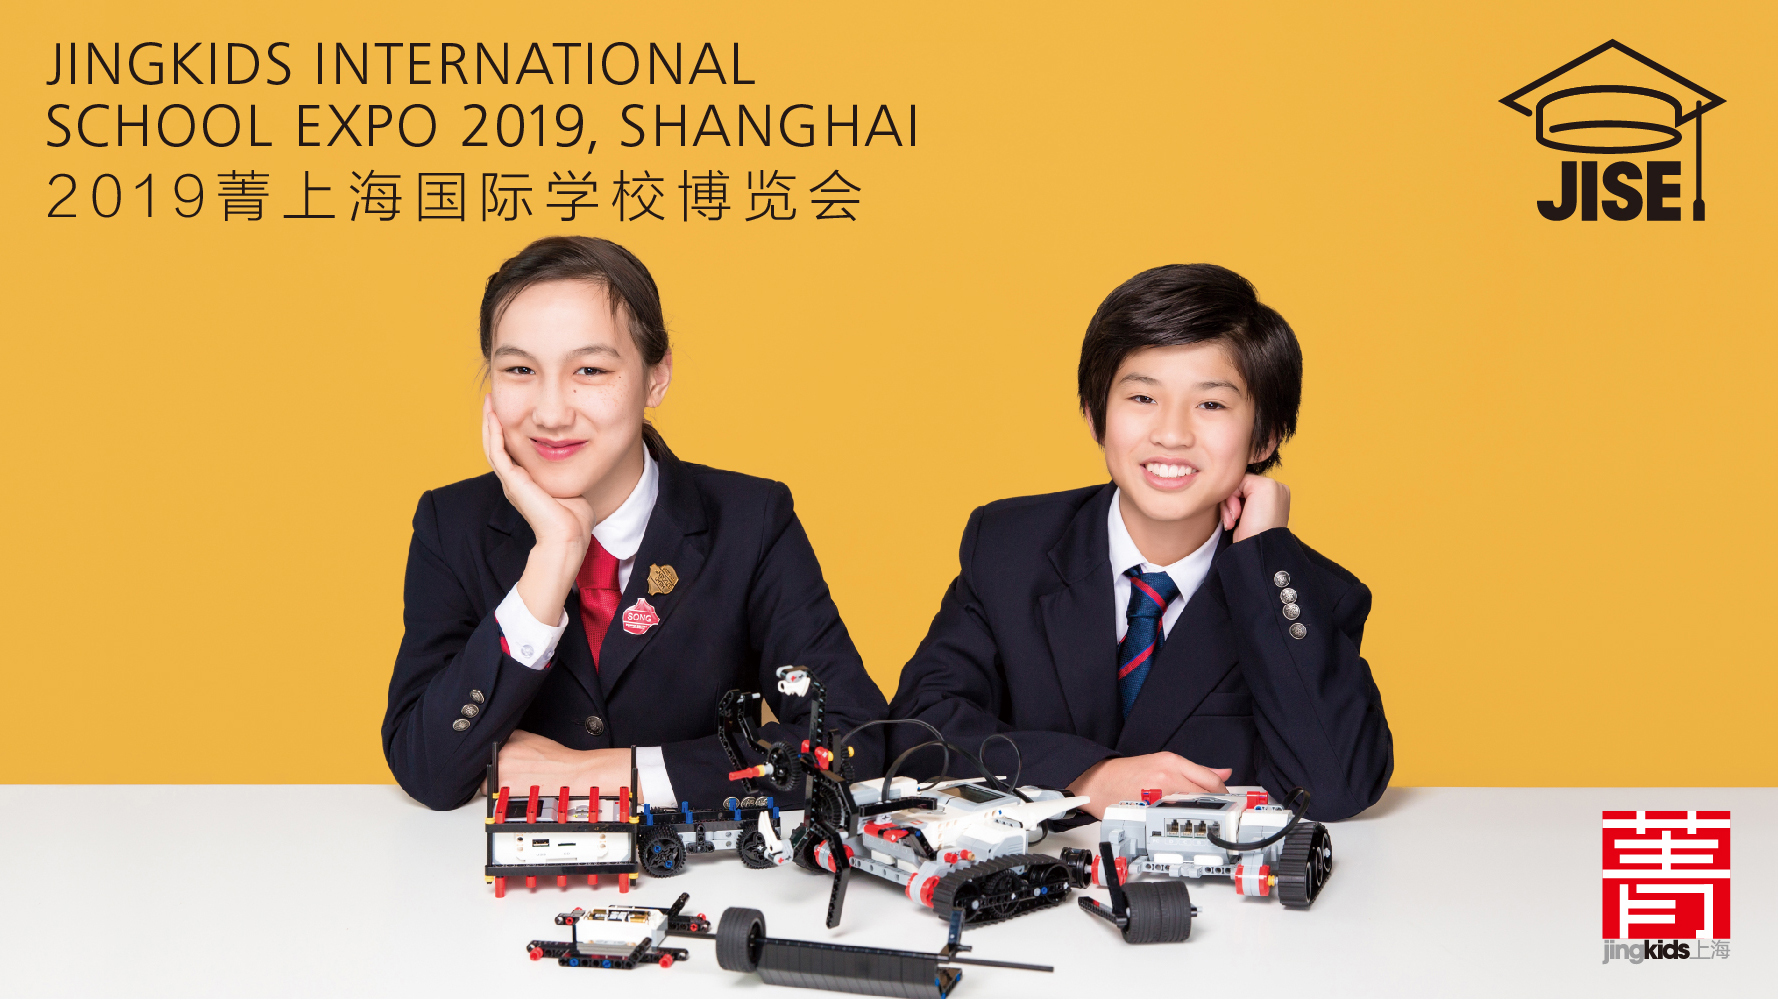 Jingkids International School Expo 2019 Shanghai